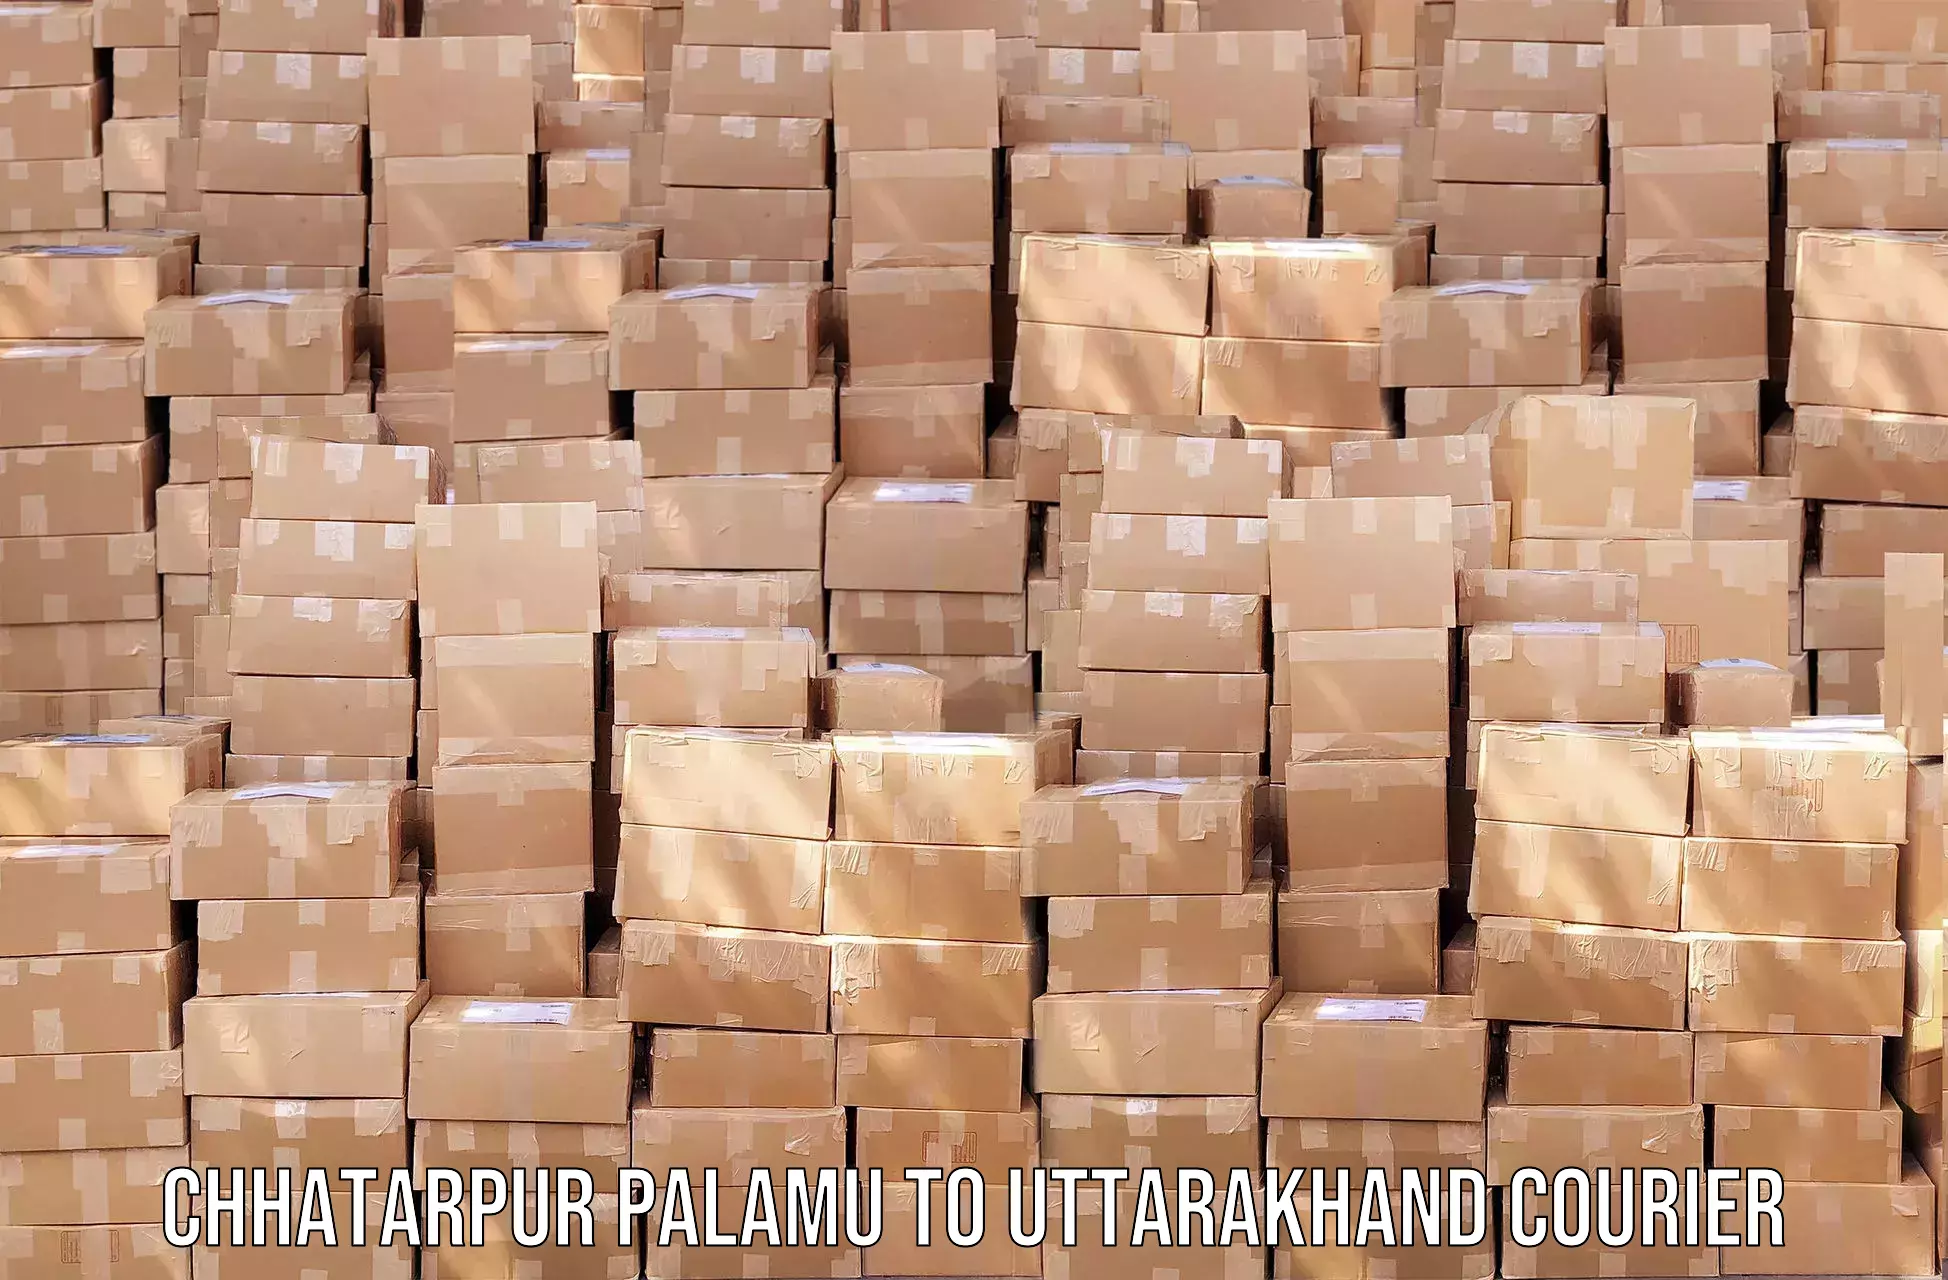 Budget-friendly shipping Chhatarpur Palamu to Dehradun